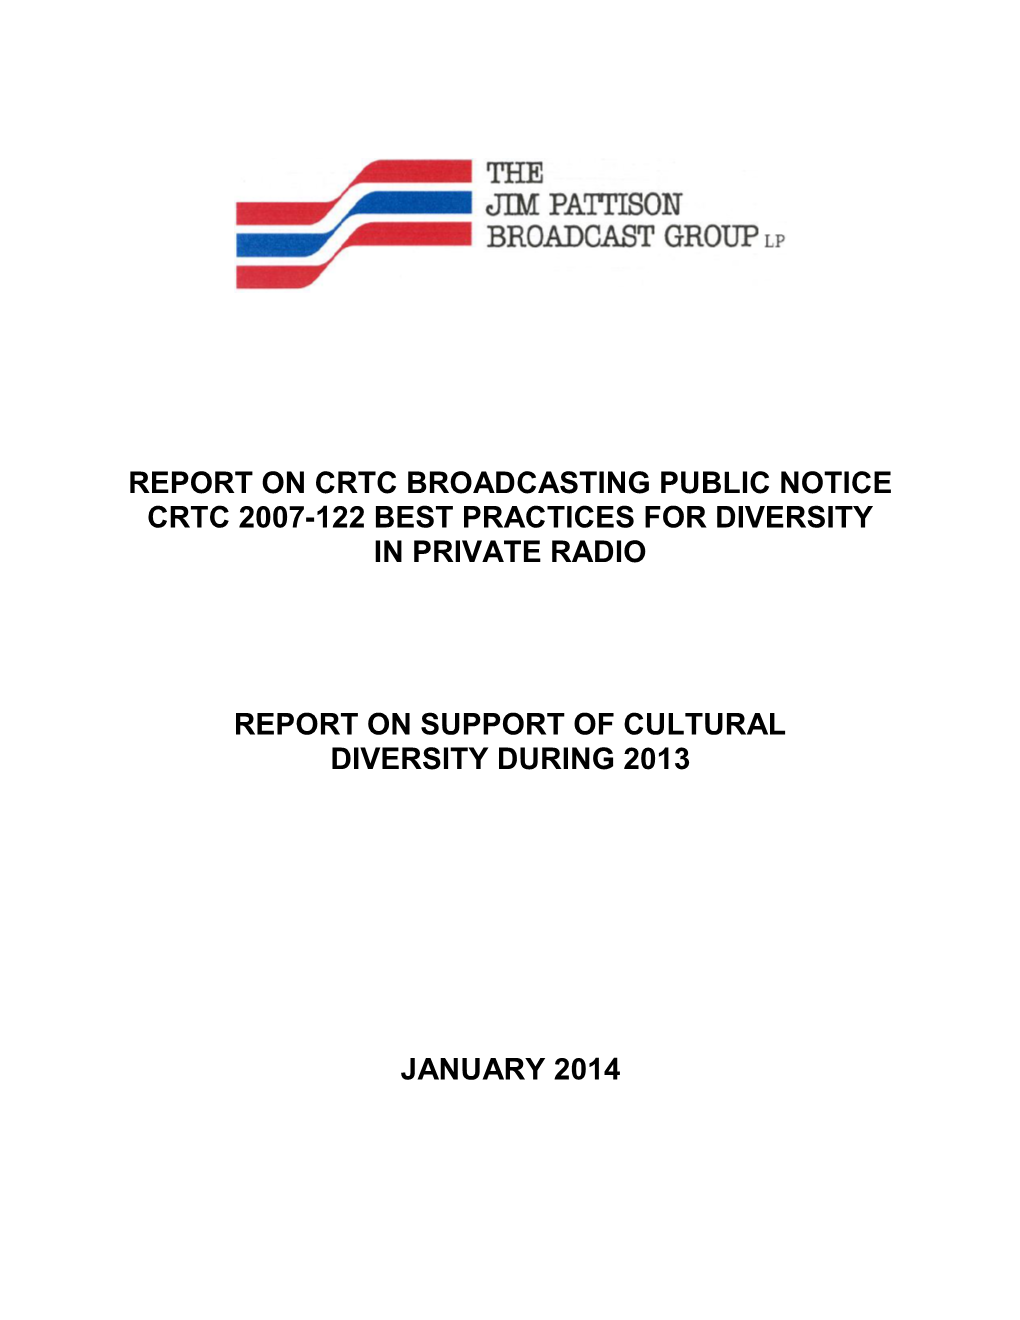 Report on Crtc Broadcasting Public Notice Crtc 2007-122 Best Practices for Diversity in Private Radio